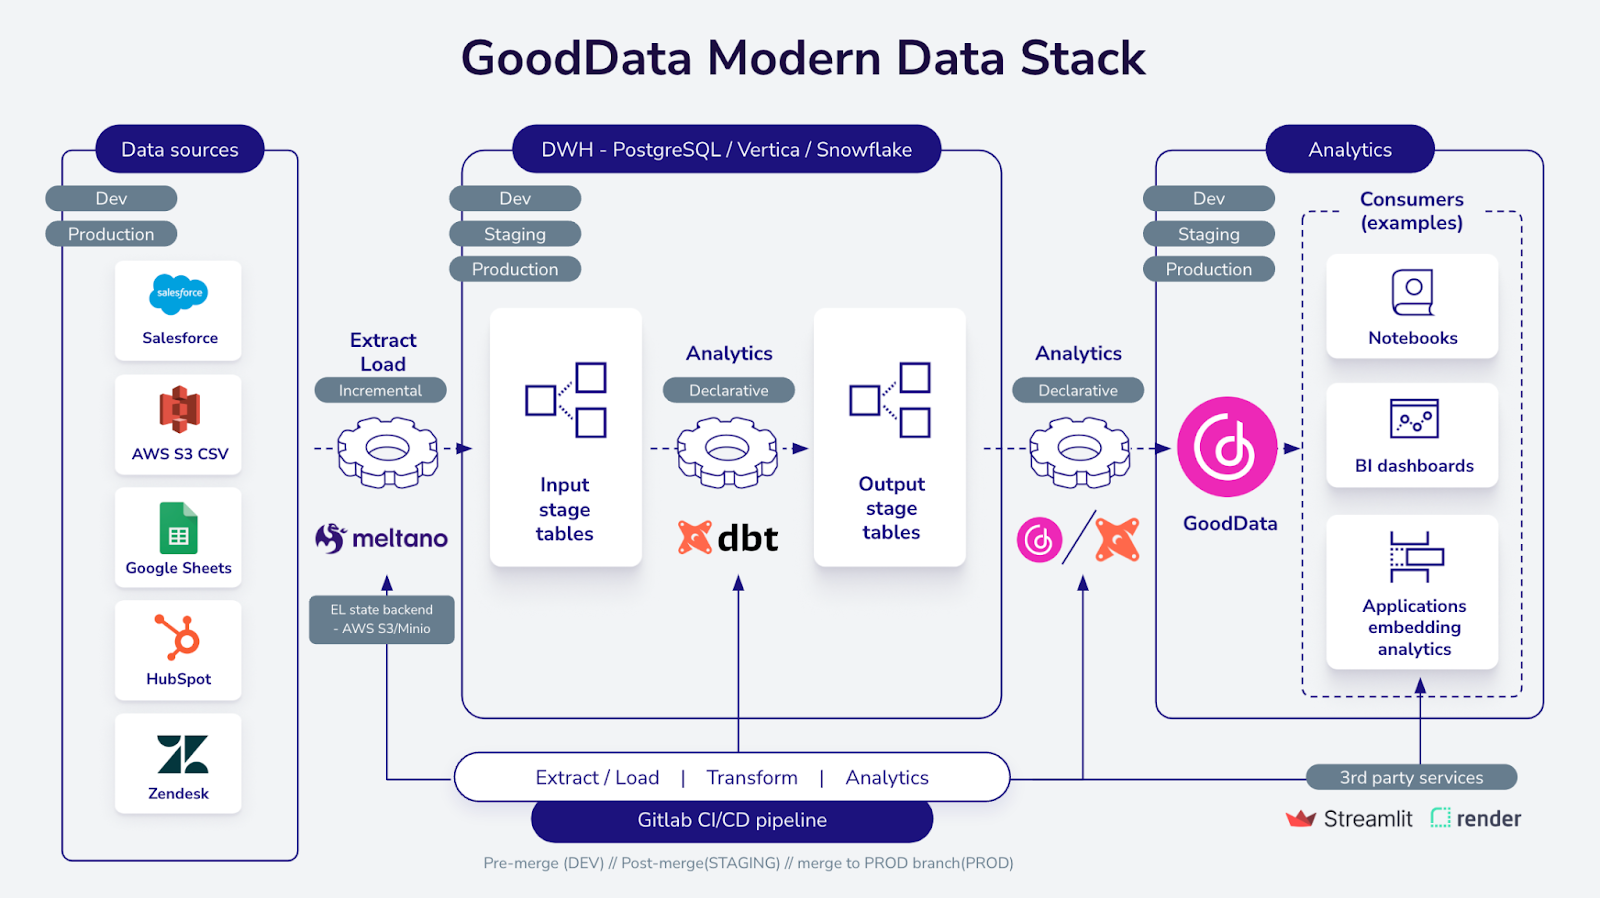 Modern Data Stack